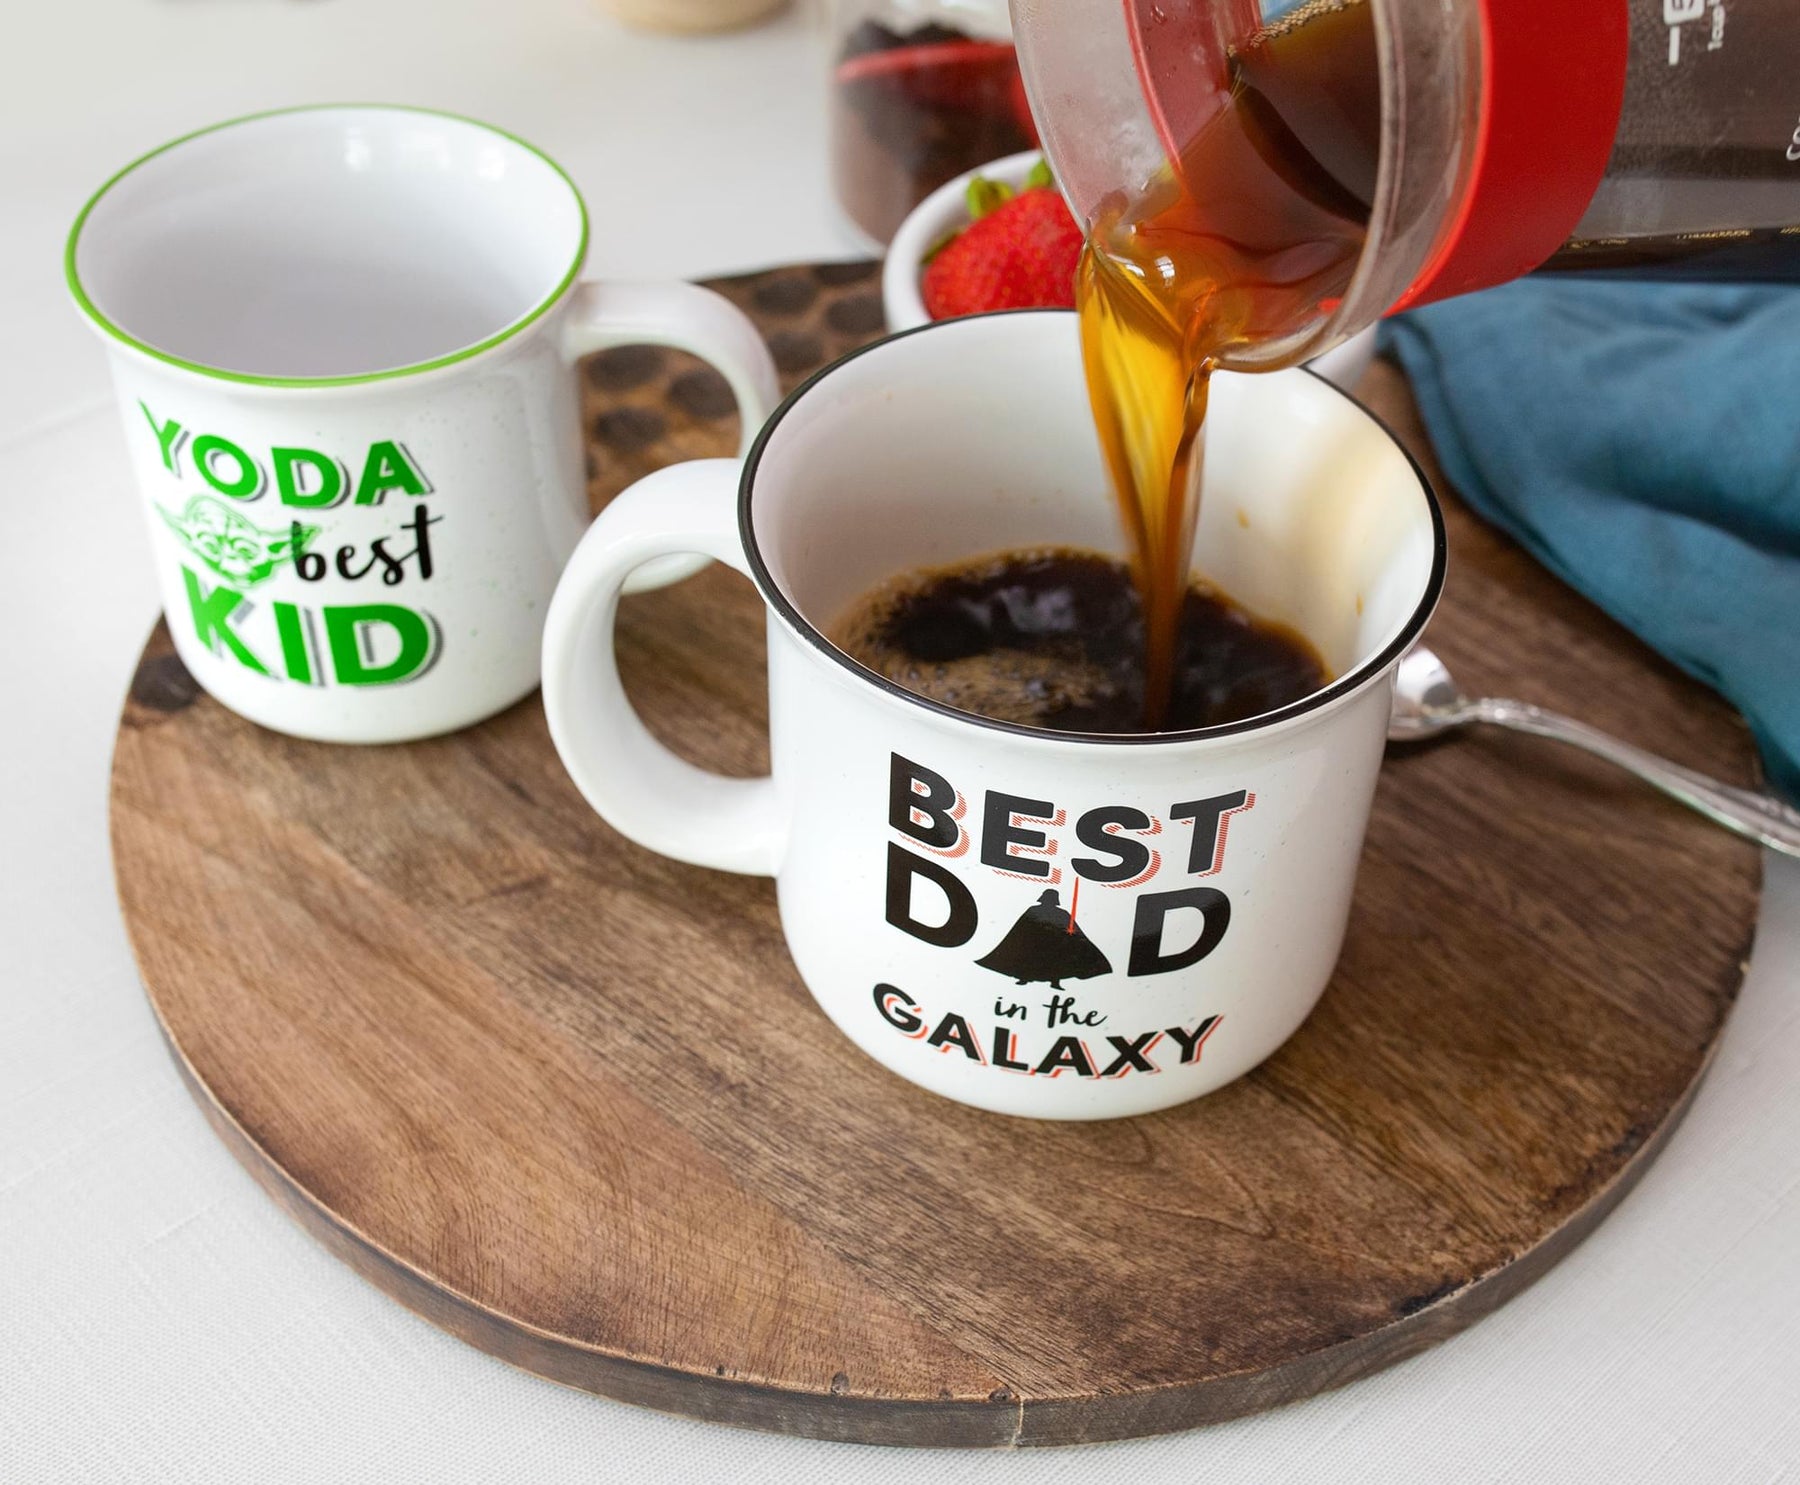 Star Wars "Best Dad" Darth Vader & "Yoda Best Kid" Ceramic Camper Mug | Set of 2